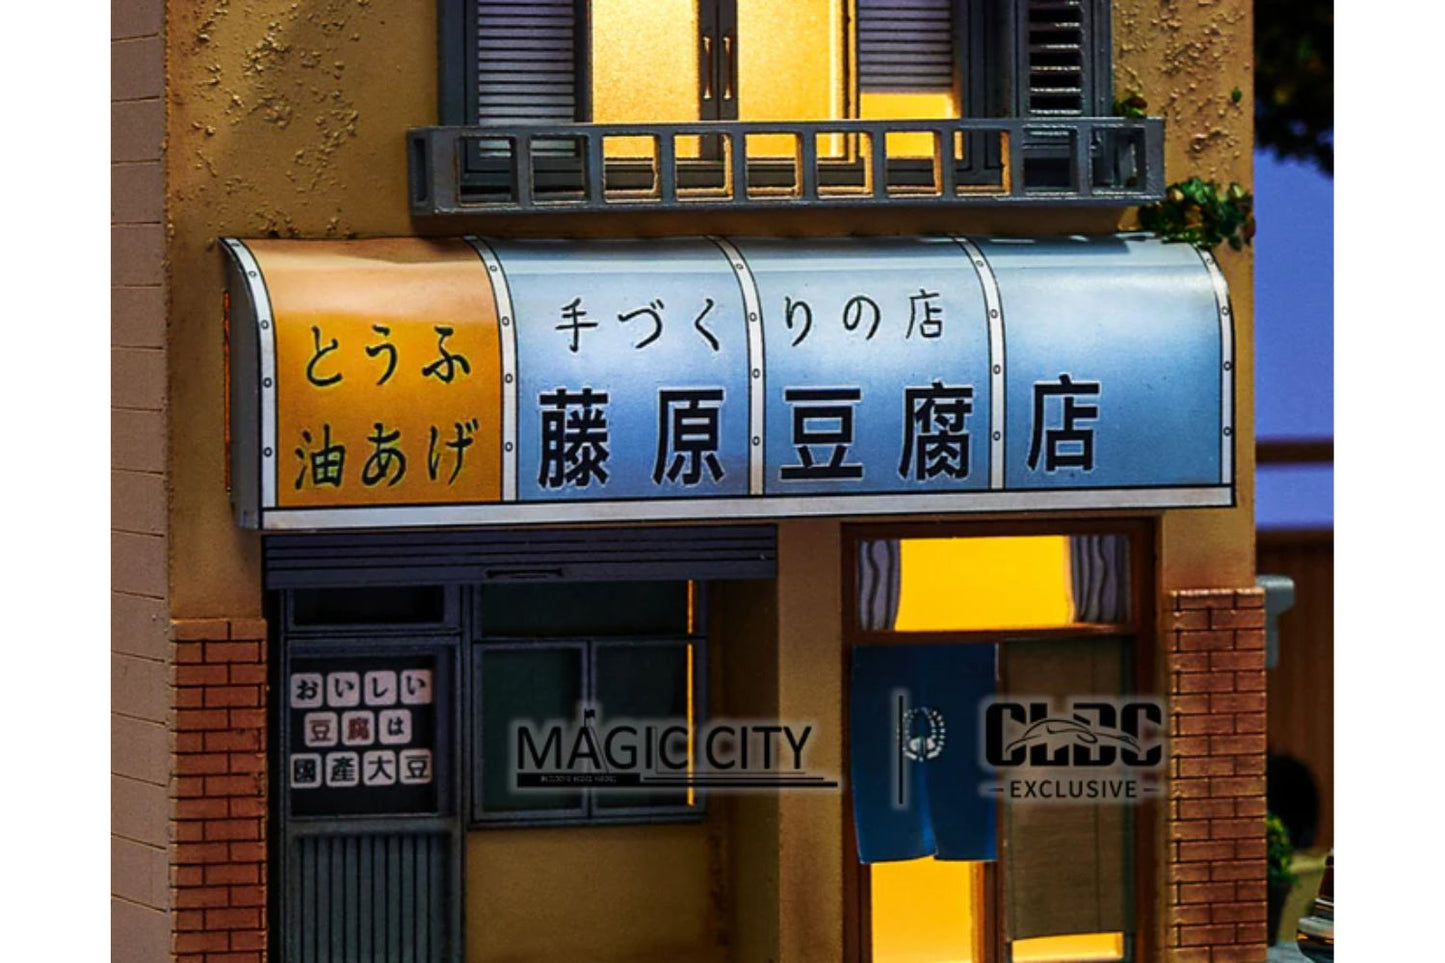 Magic City x CLDC Exclusive 1/64 Scale Illuminated Fujiwara Tofu Shop